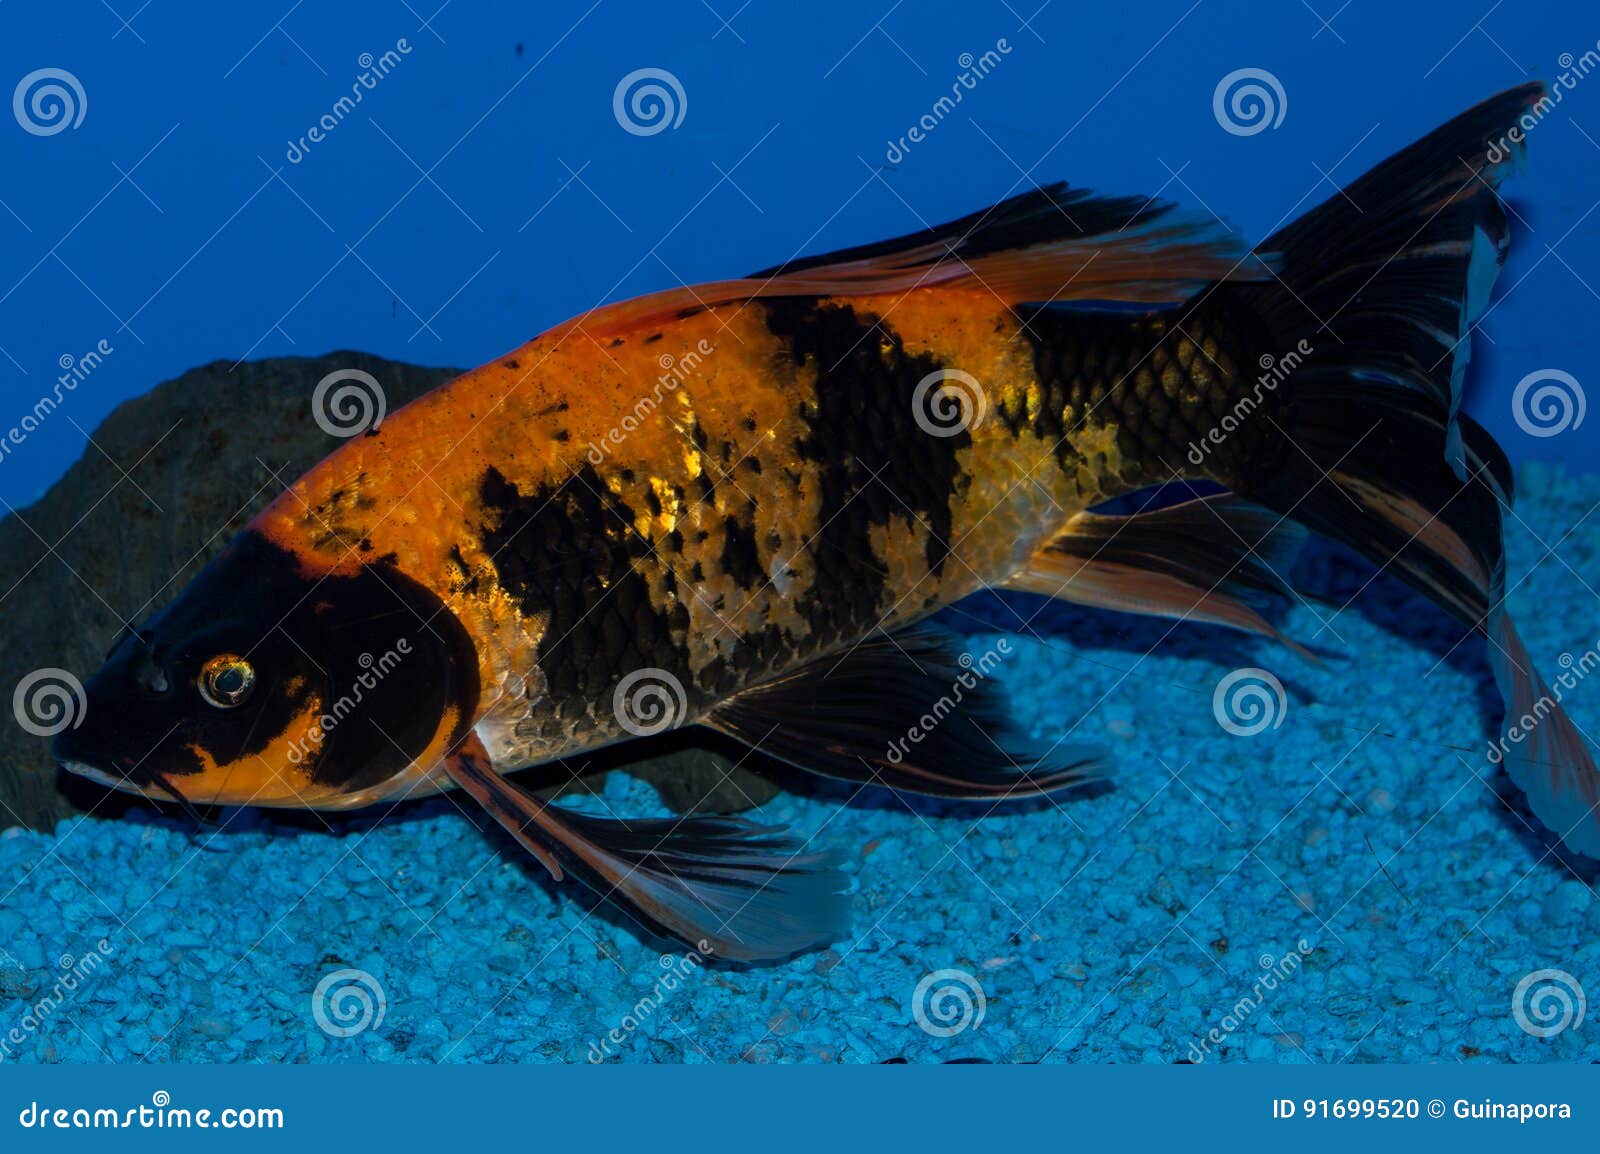 gold black butterfly koi butterfly koi longfin koi dragon carp type ornamental fish notable their elongated 91699520